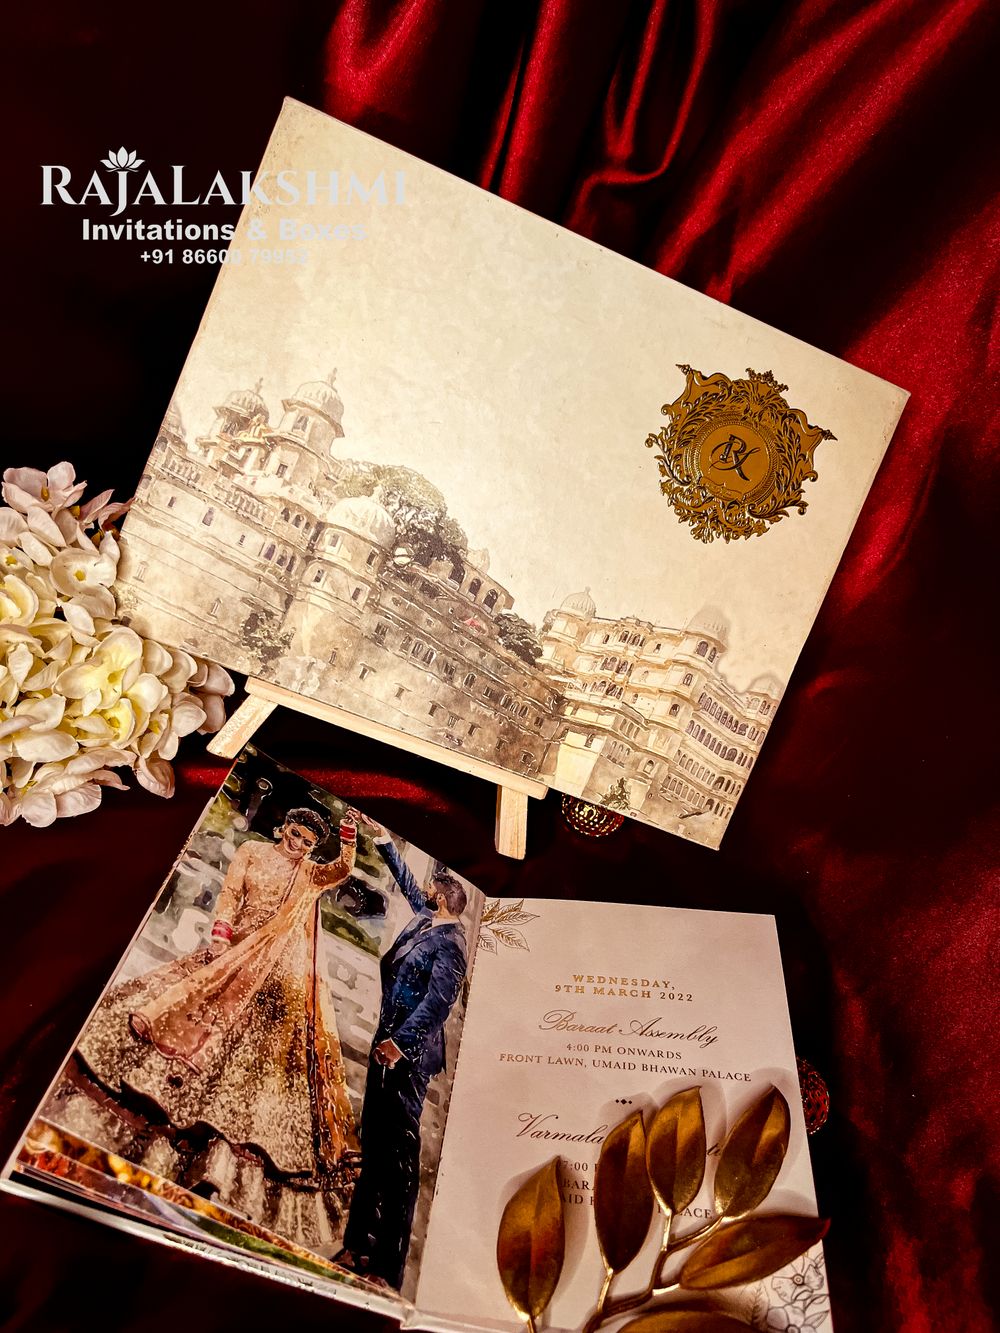 Photo From Wooden/MDF - By Sri Raja Lakshmi Wedding Cards